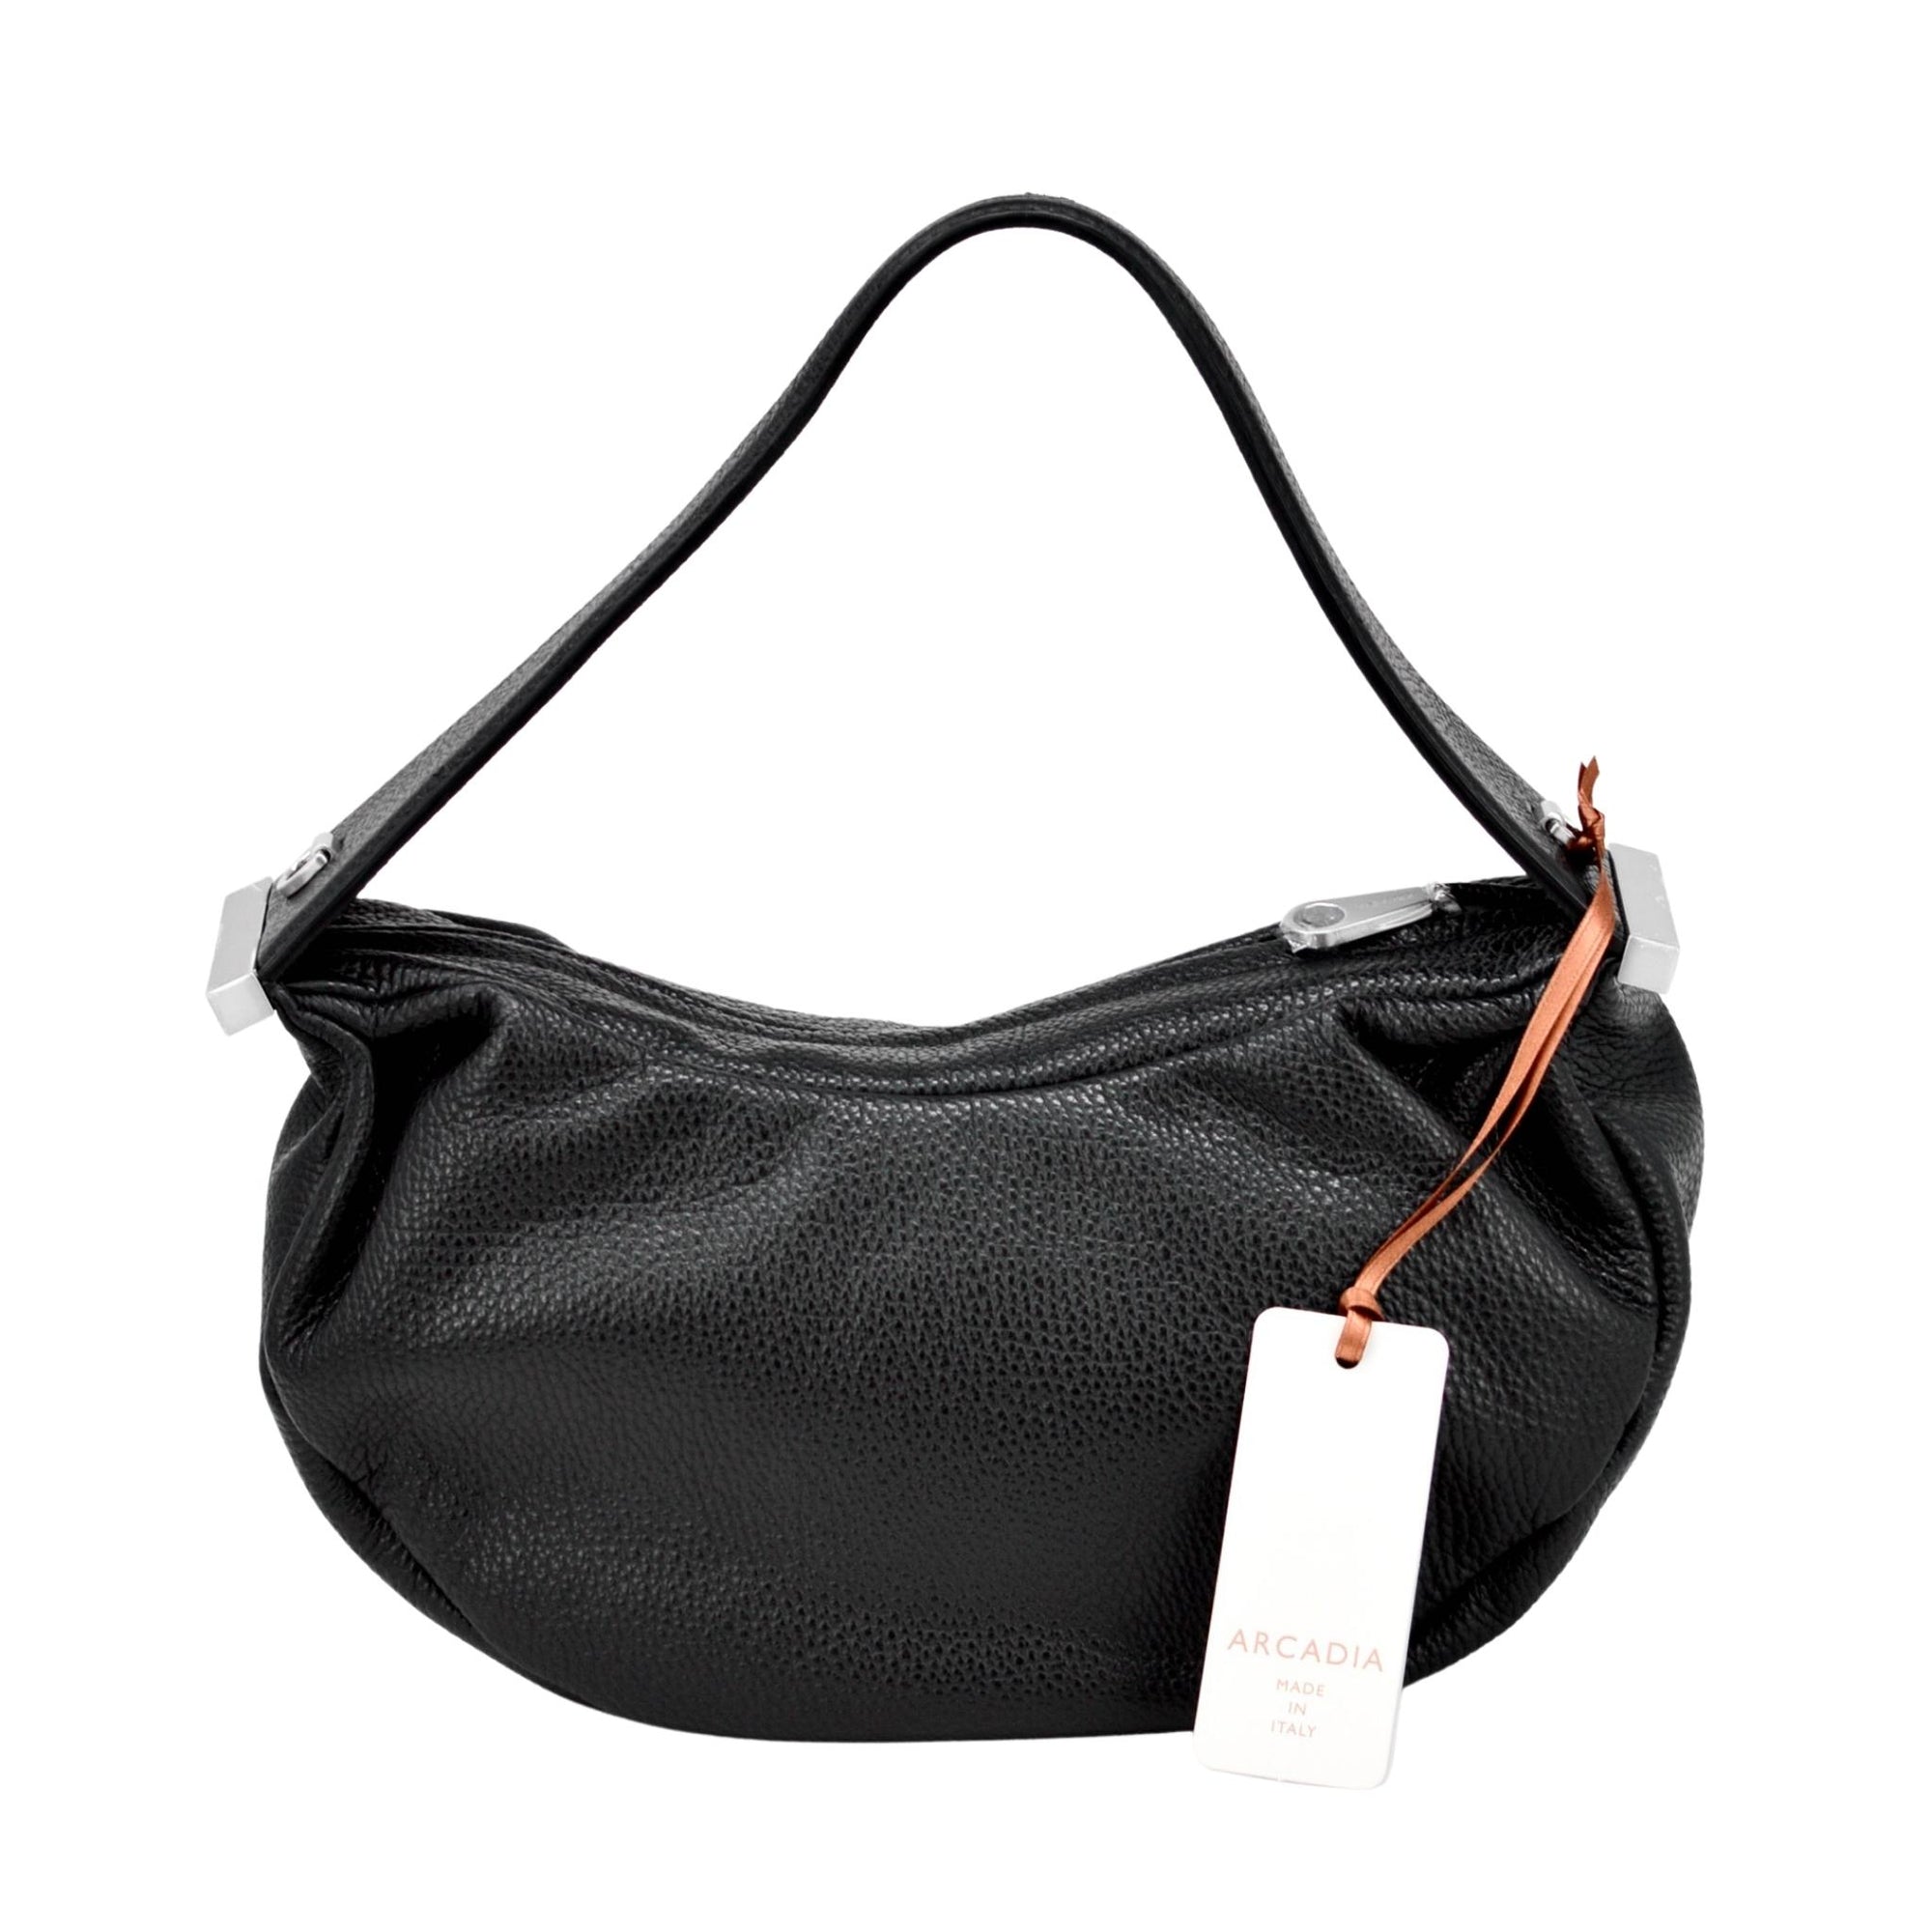 Alessia Italian Leather Bag, Black, Made in Italy - MyItalianDecor